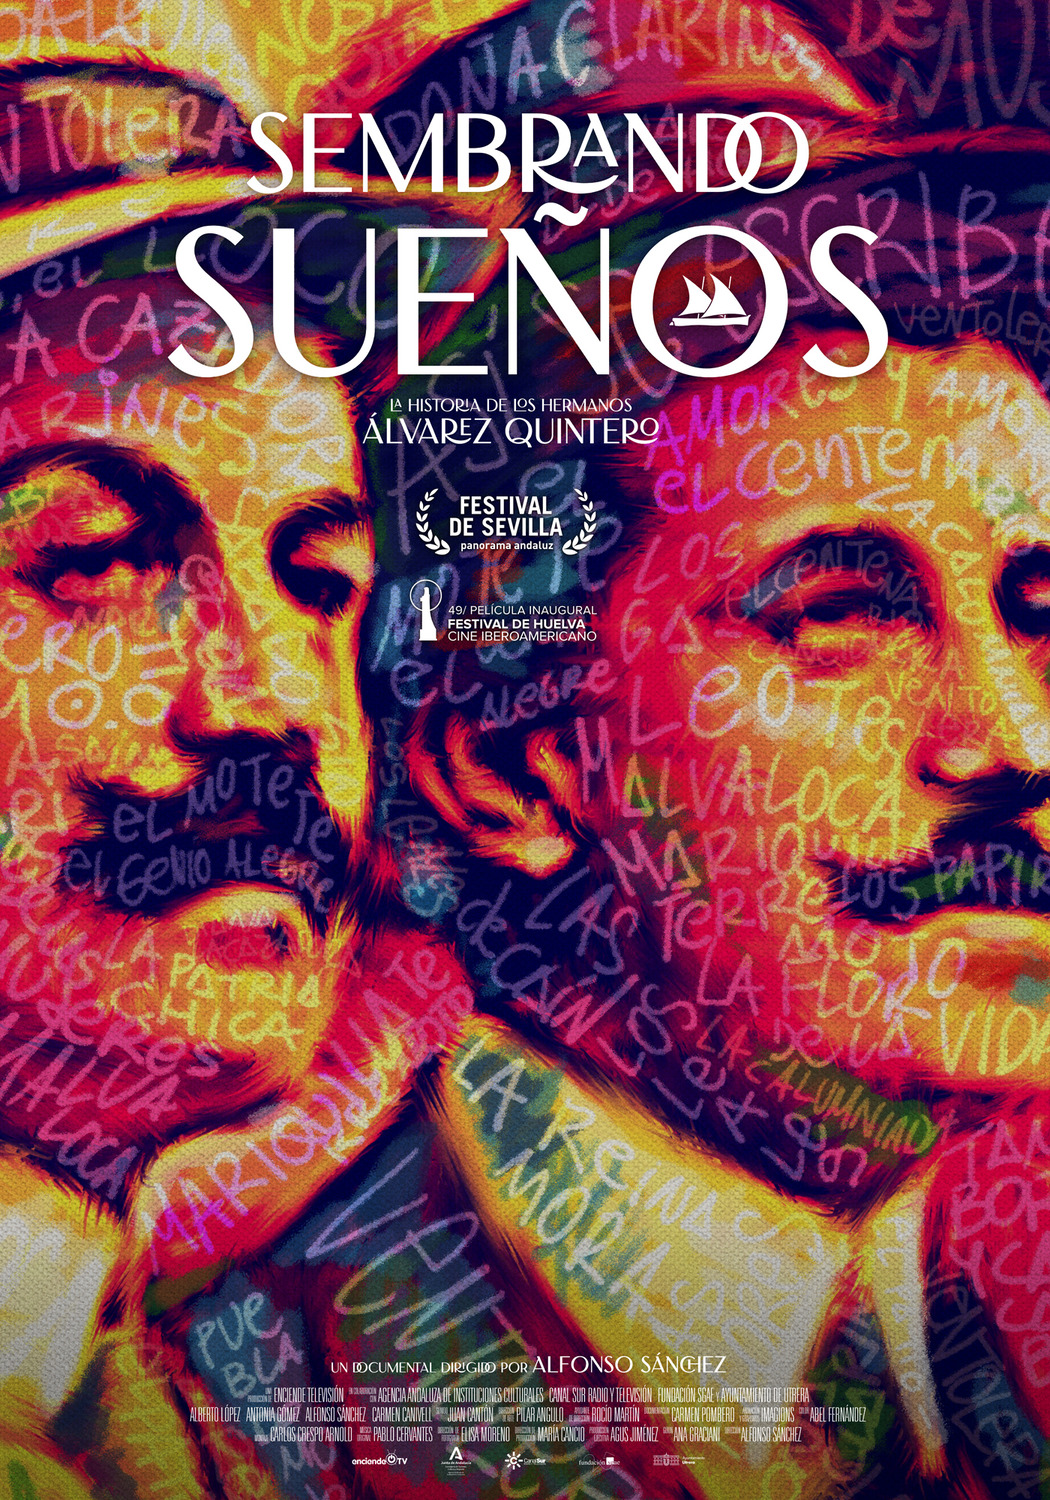 Extra Large Movie Poster Image for Sembrando sueños 